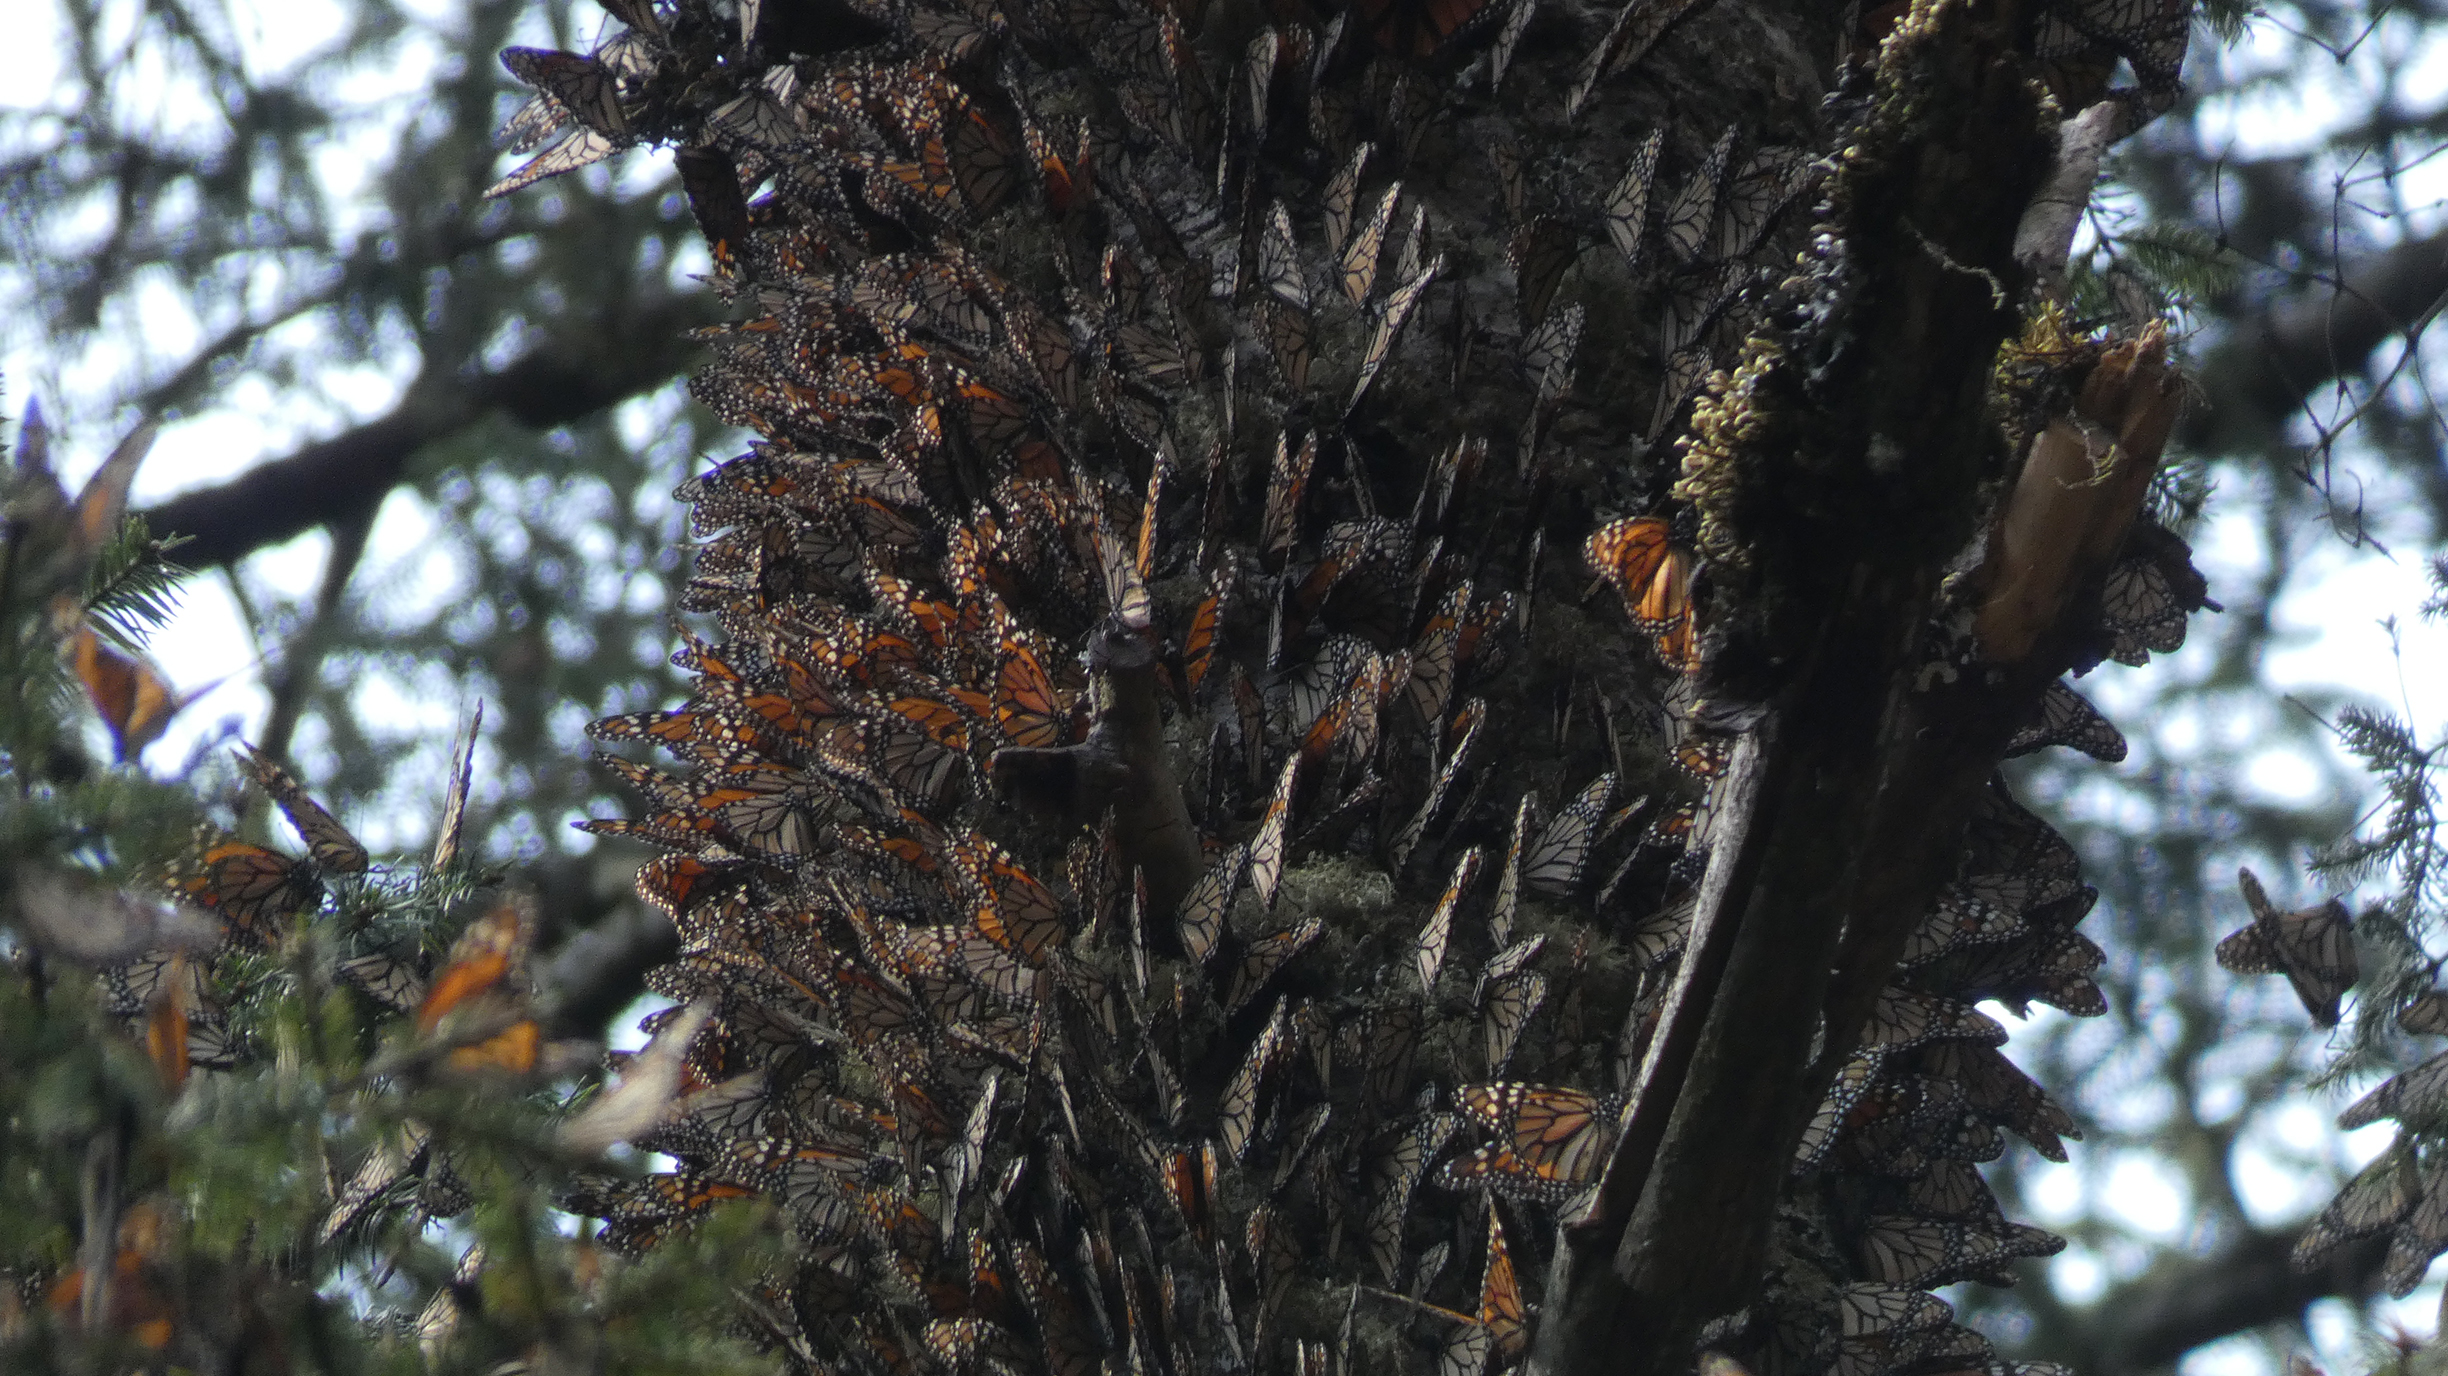 Monarchs on a tree trunk